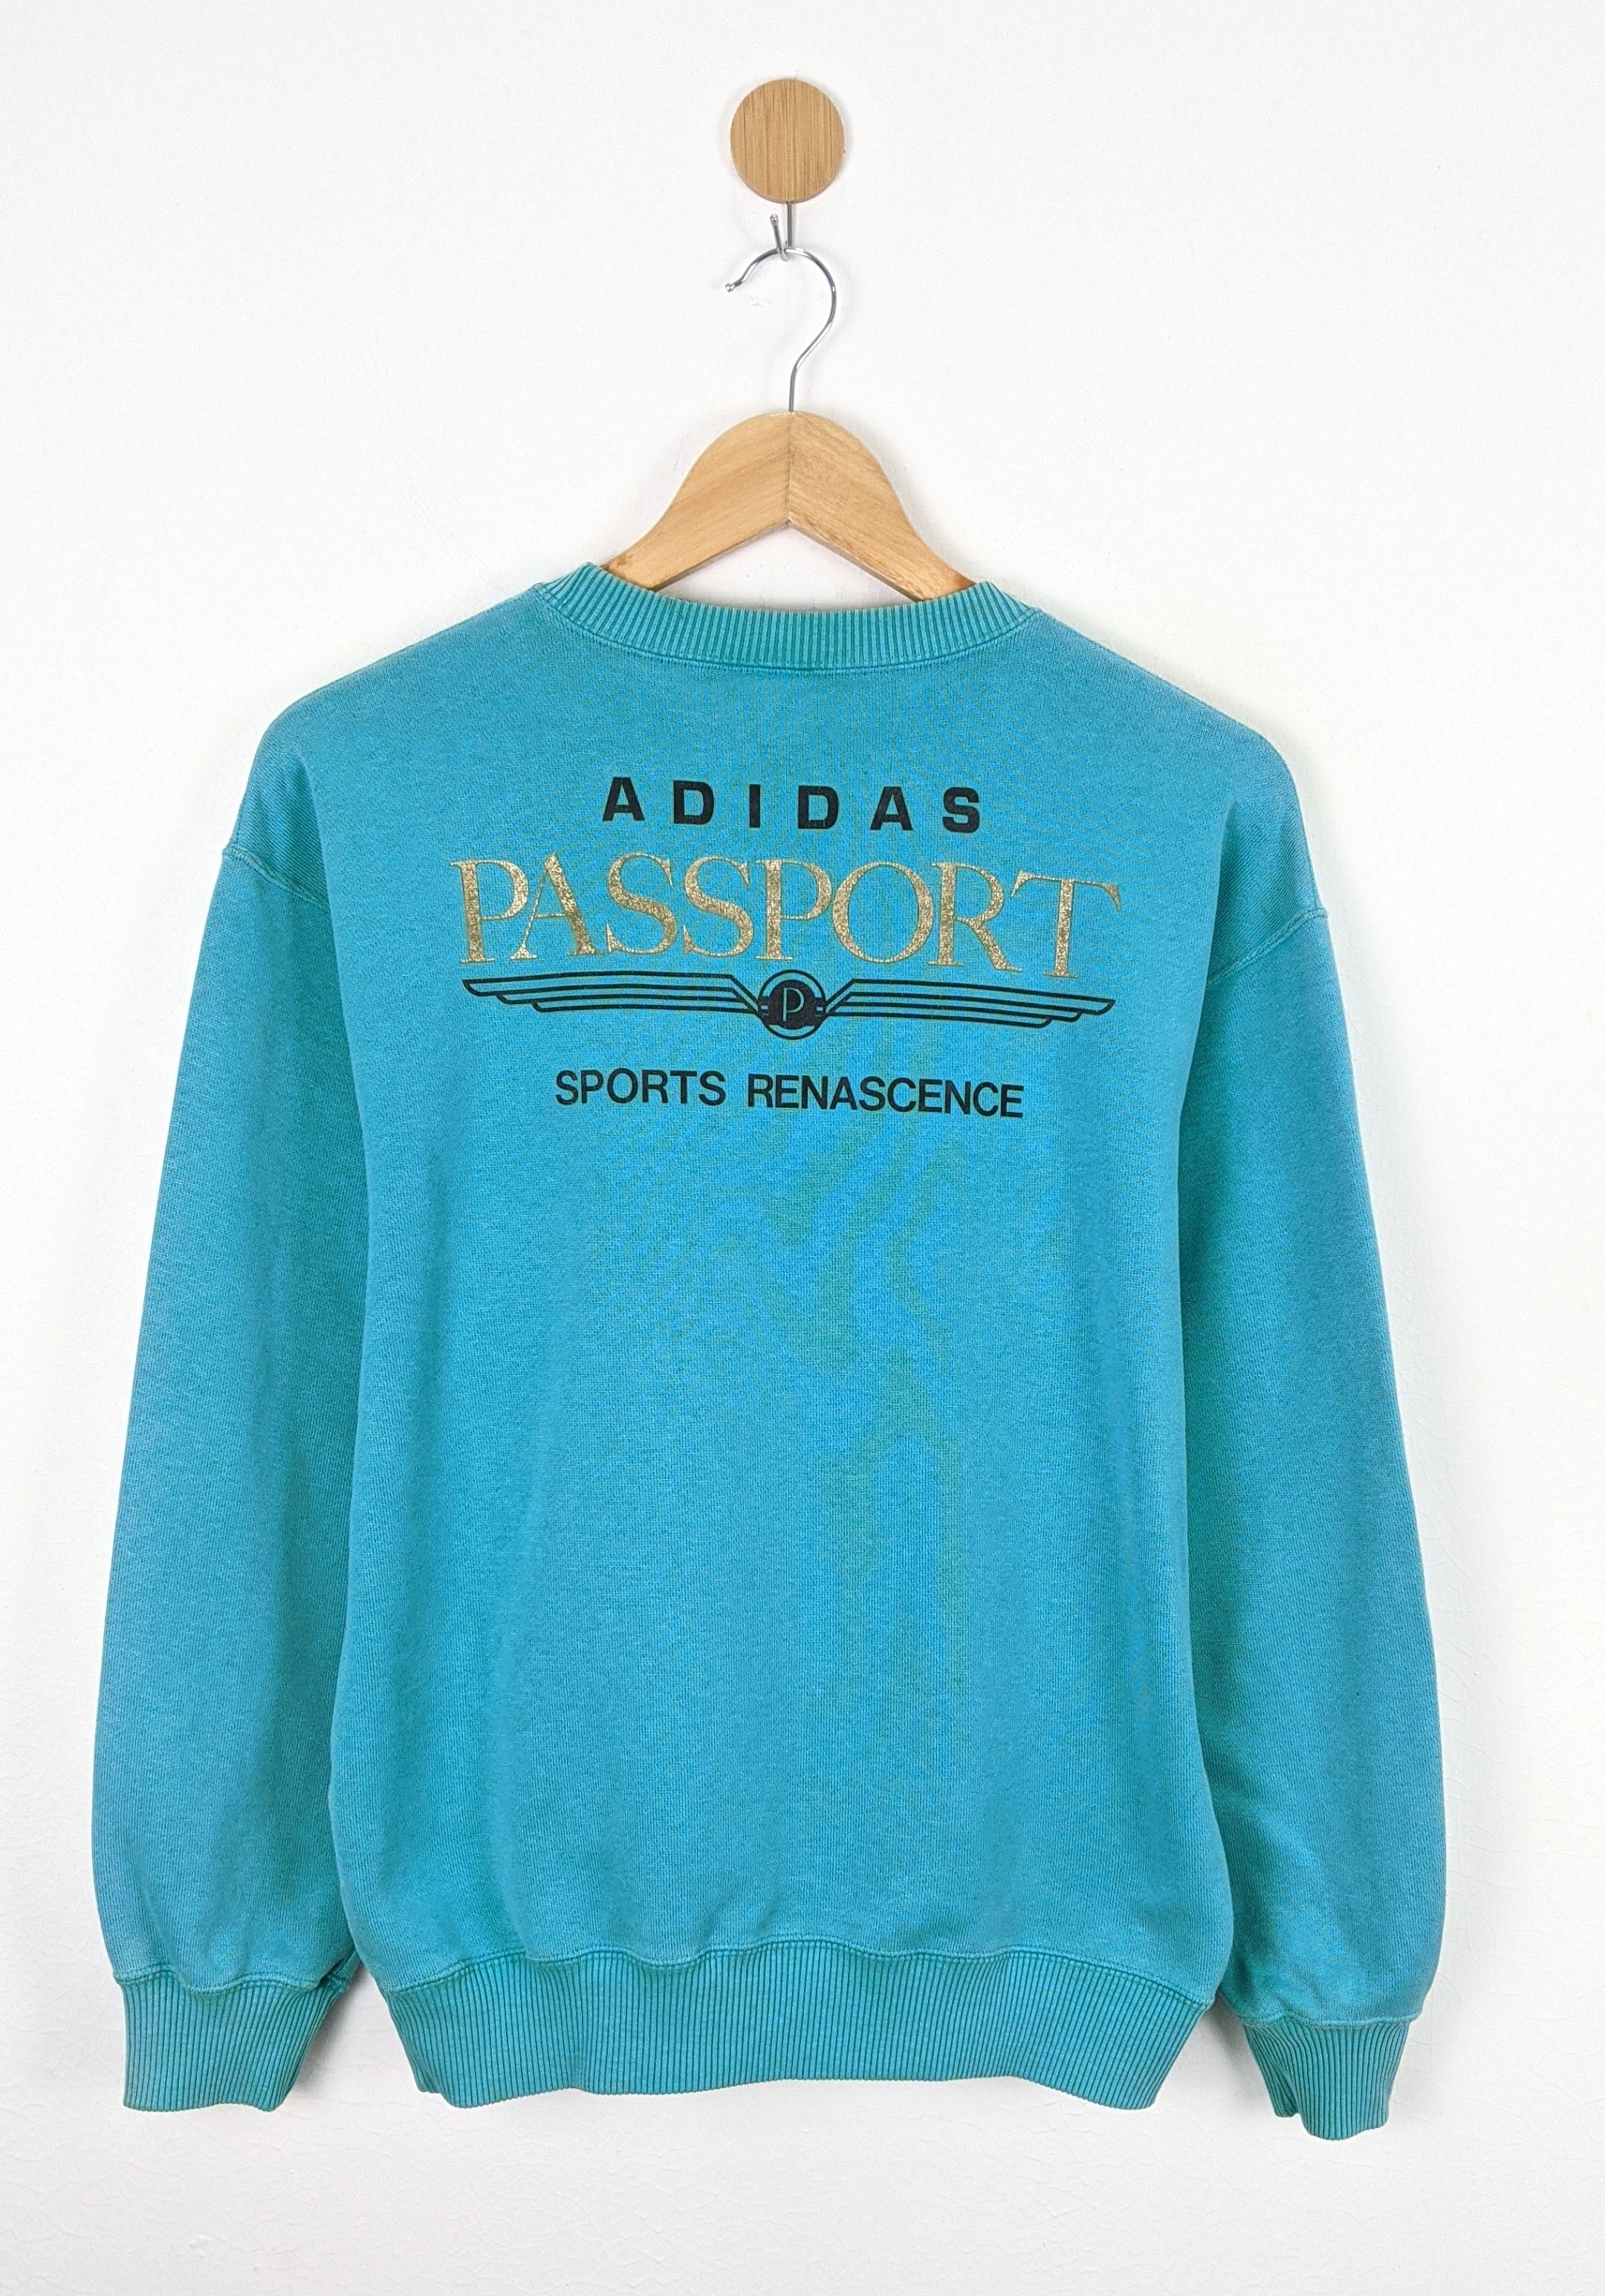 Adidas Vintage Adidas Passport sweatshirt Size US M / EU 48-50 / 2 - 3 Thumbnail